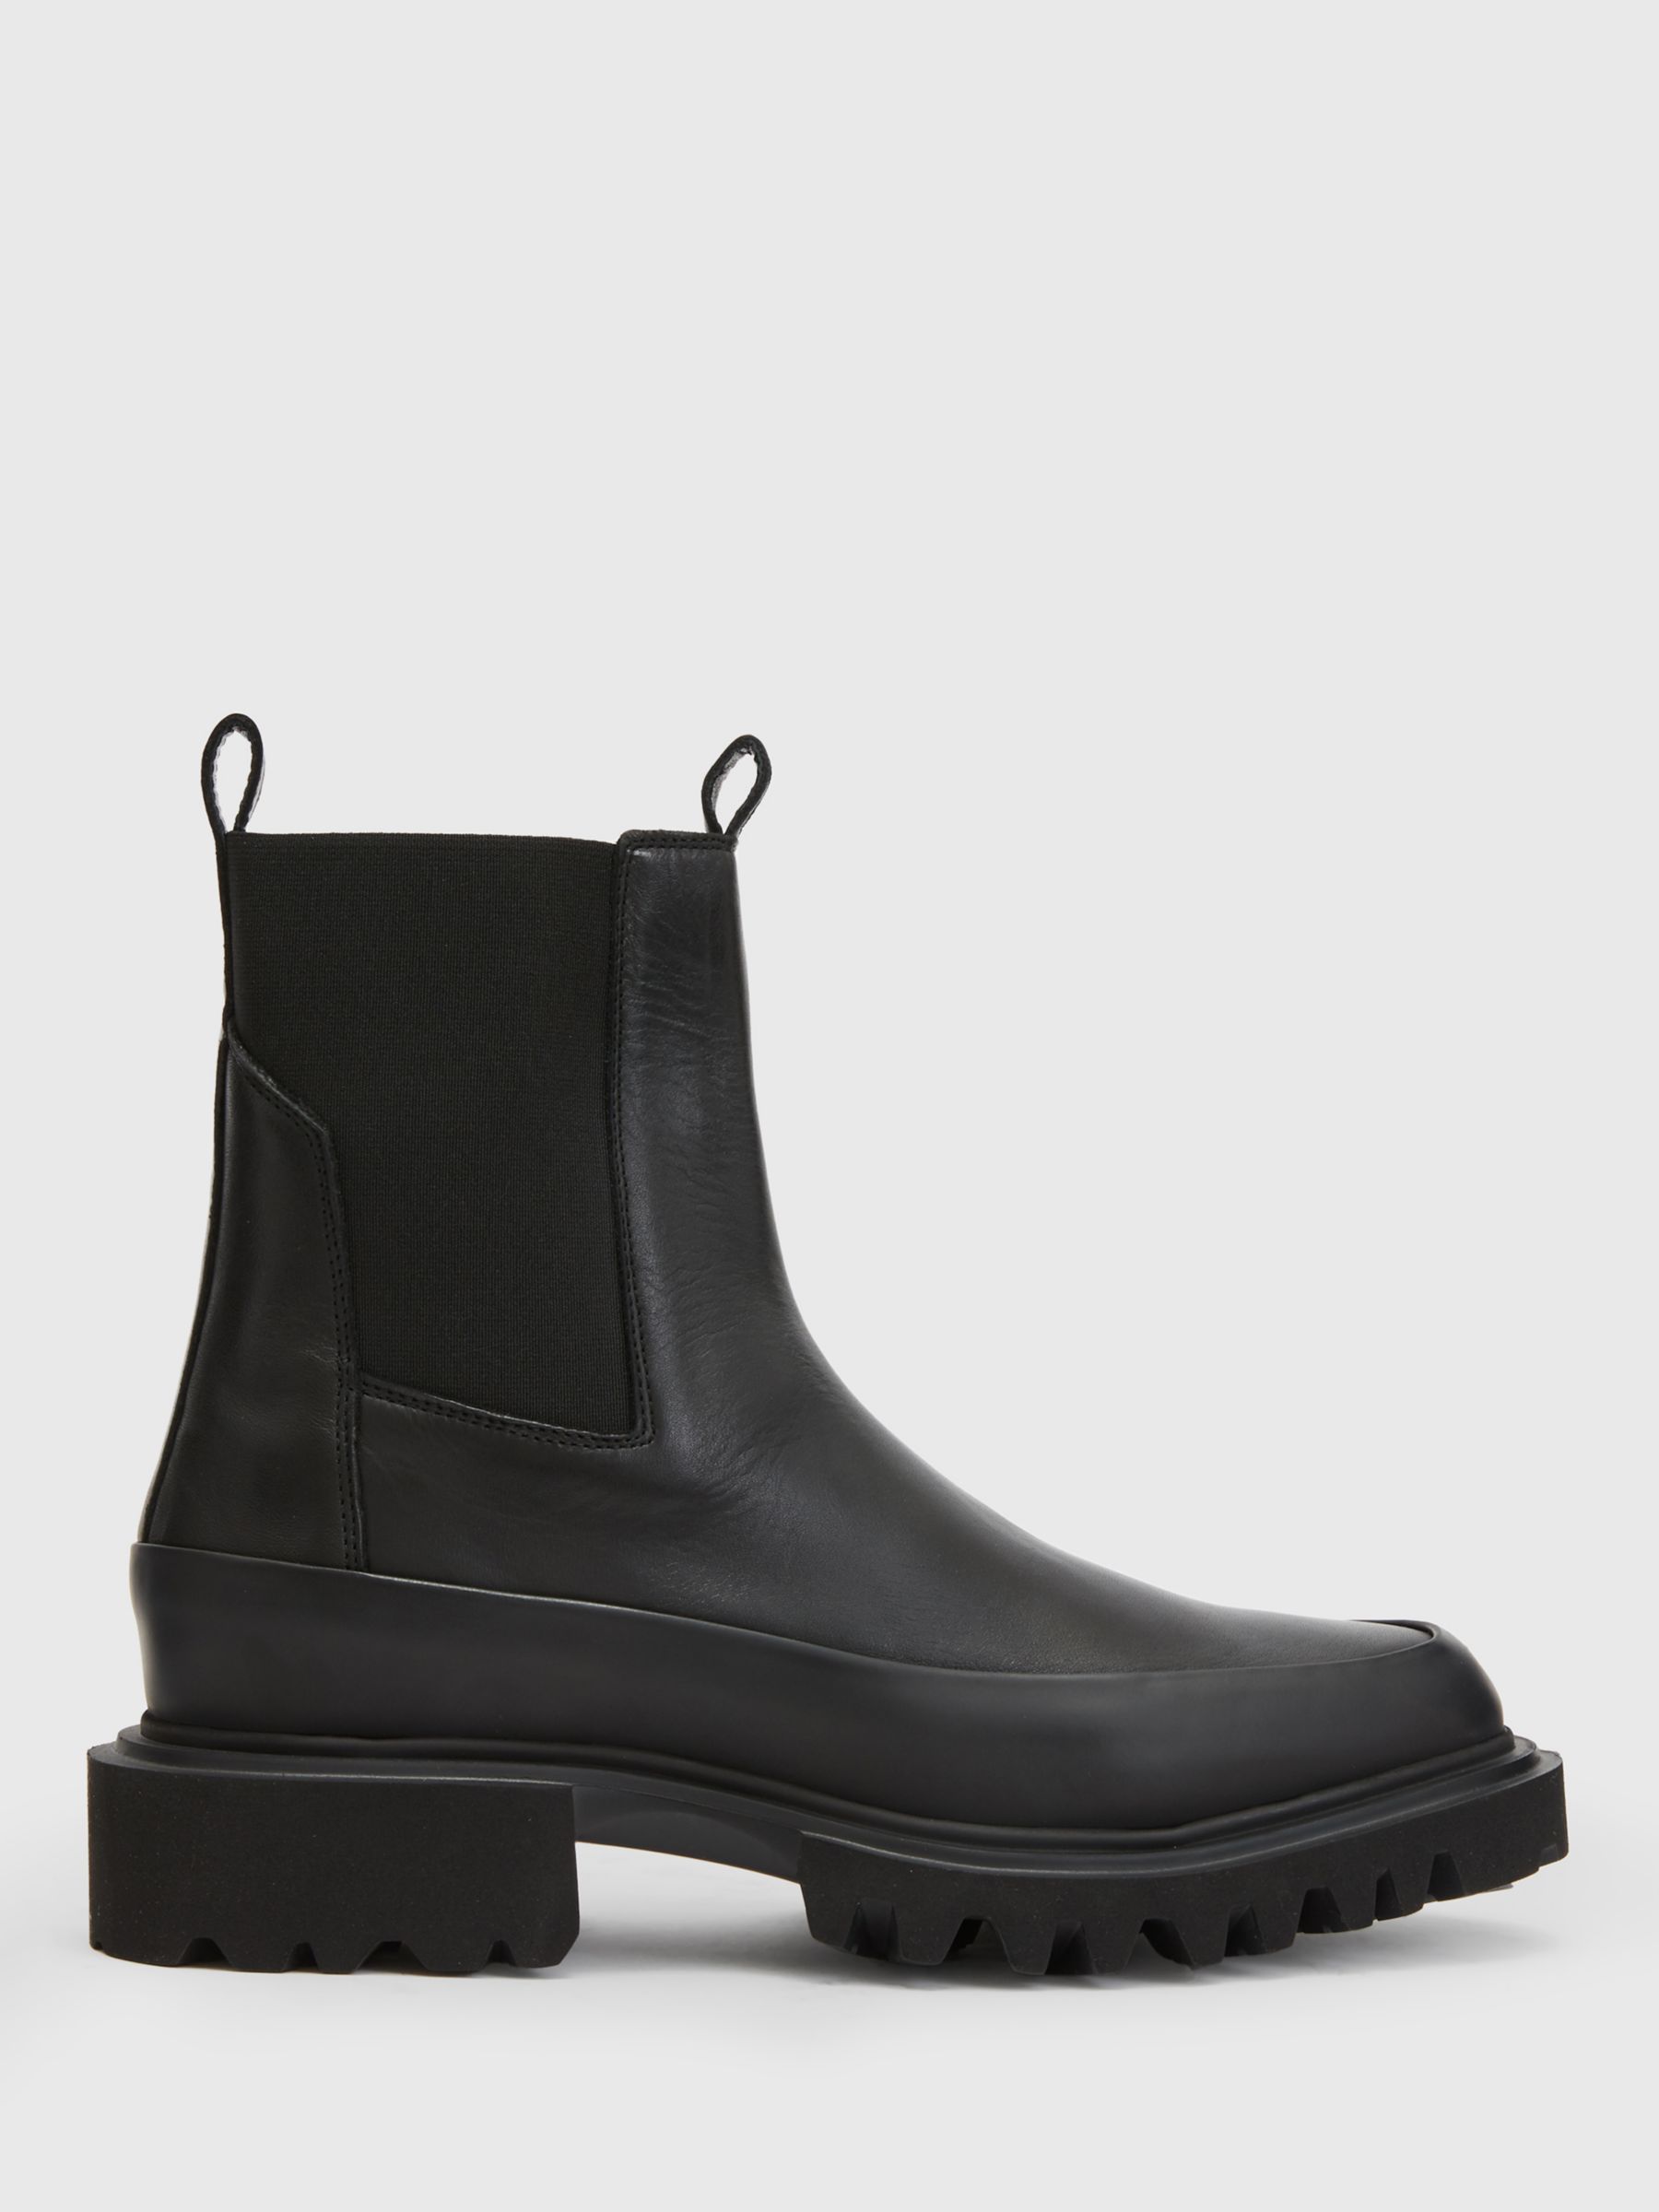 AllSaints Harlee Leather Chelsea Boots, Black, 3